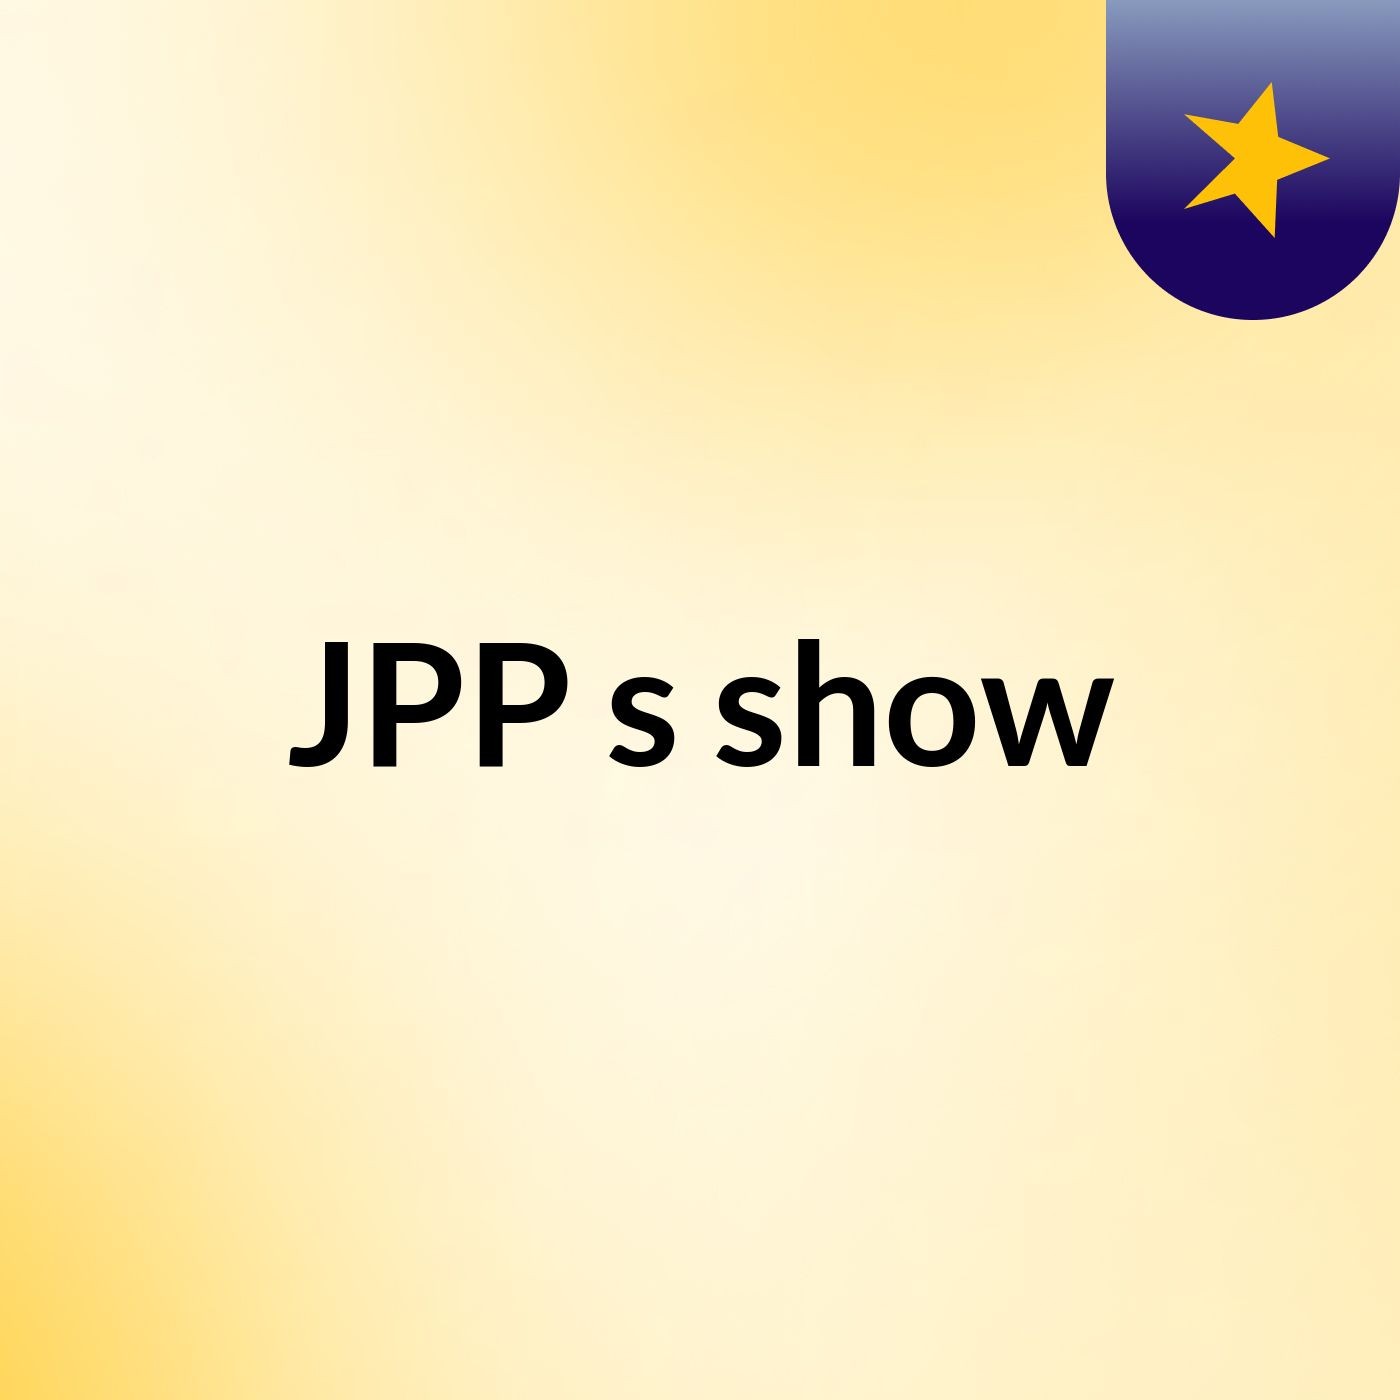 JPP's show